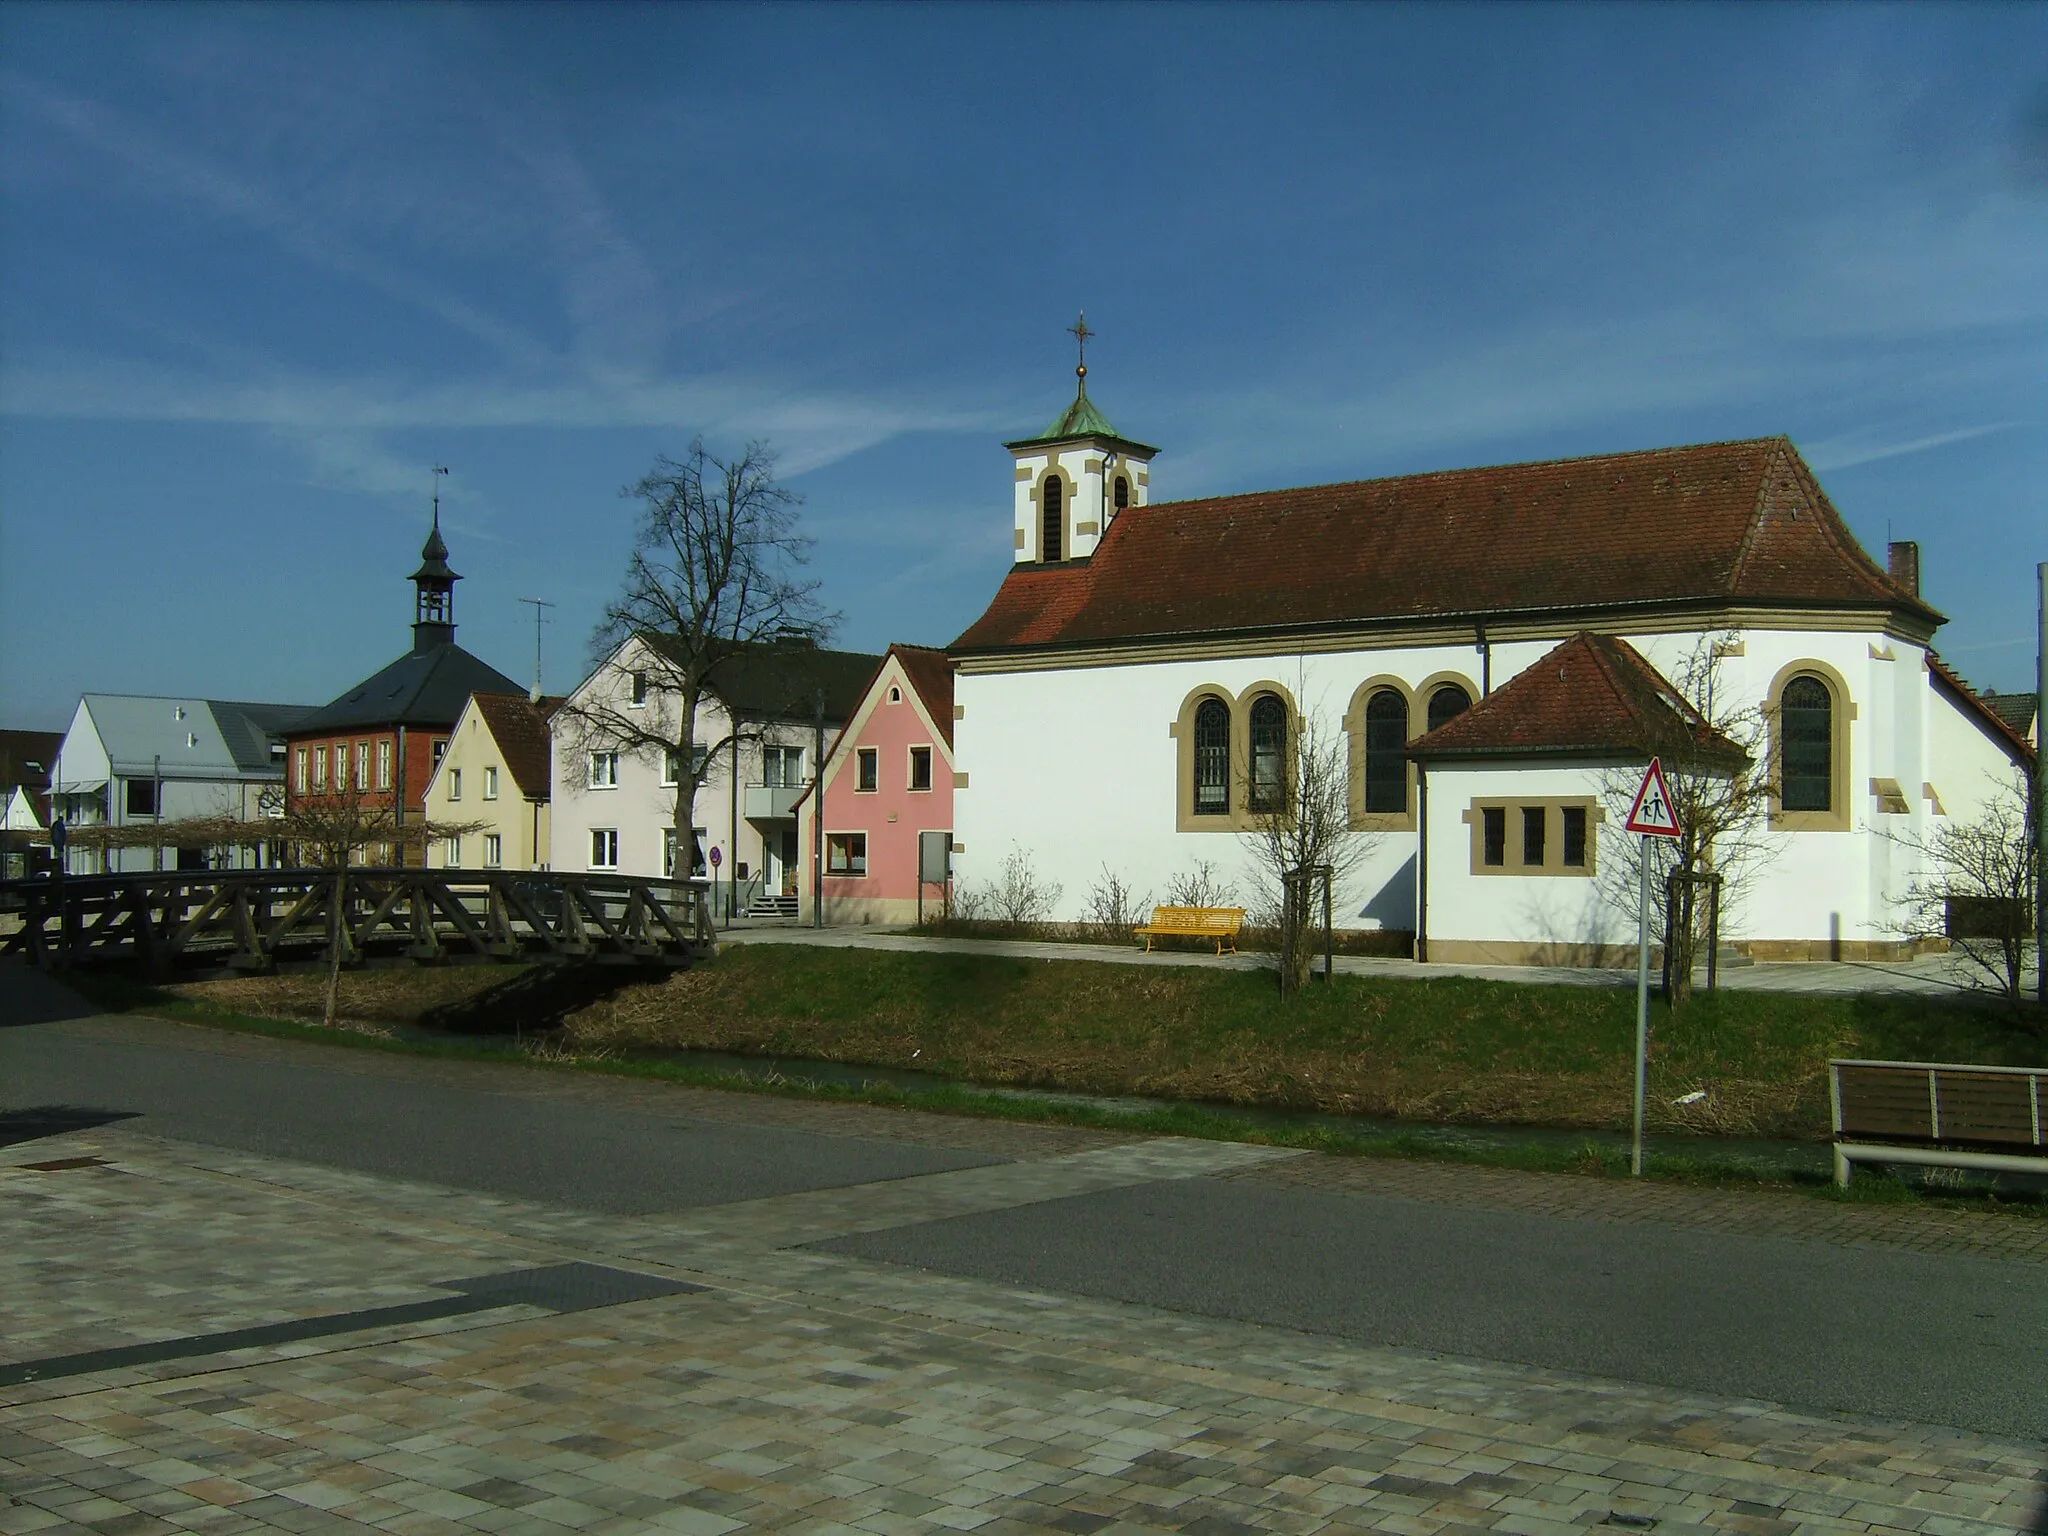 Image of Gundelsheim